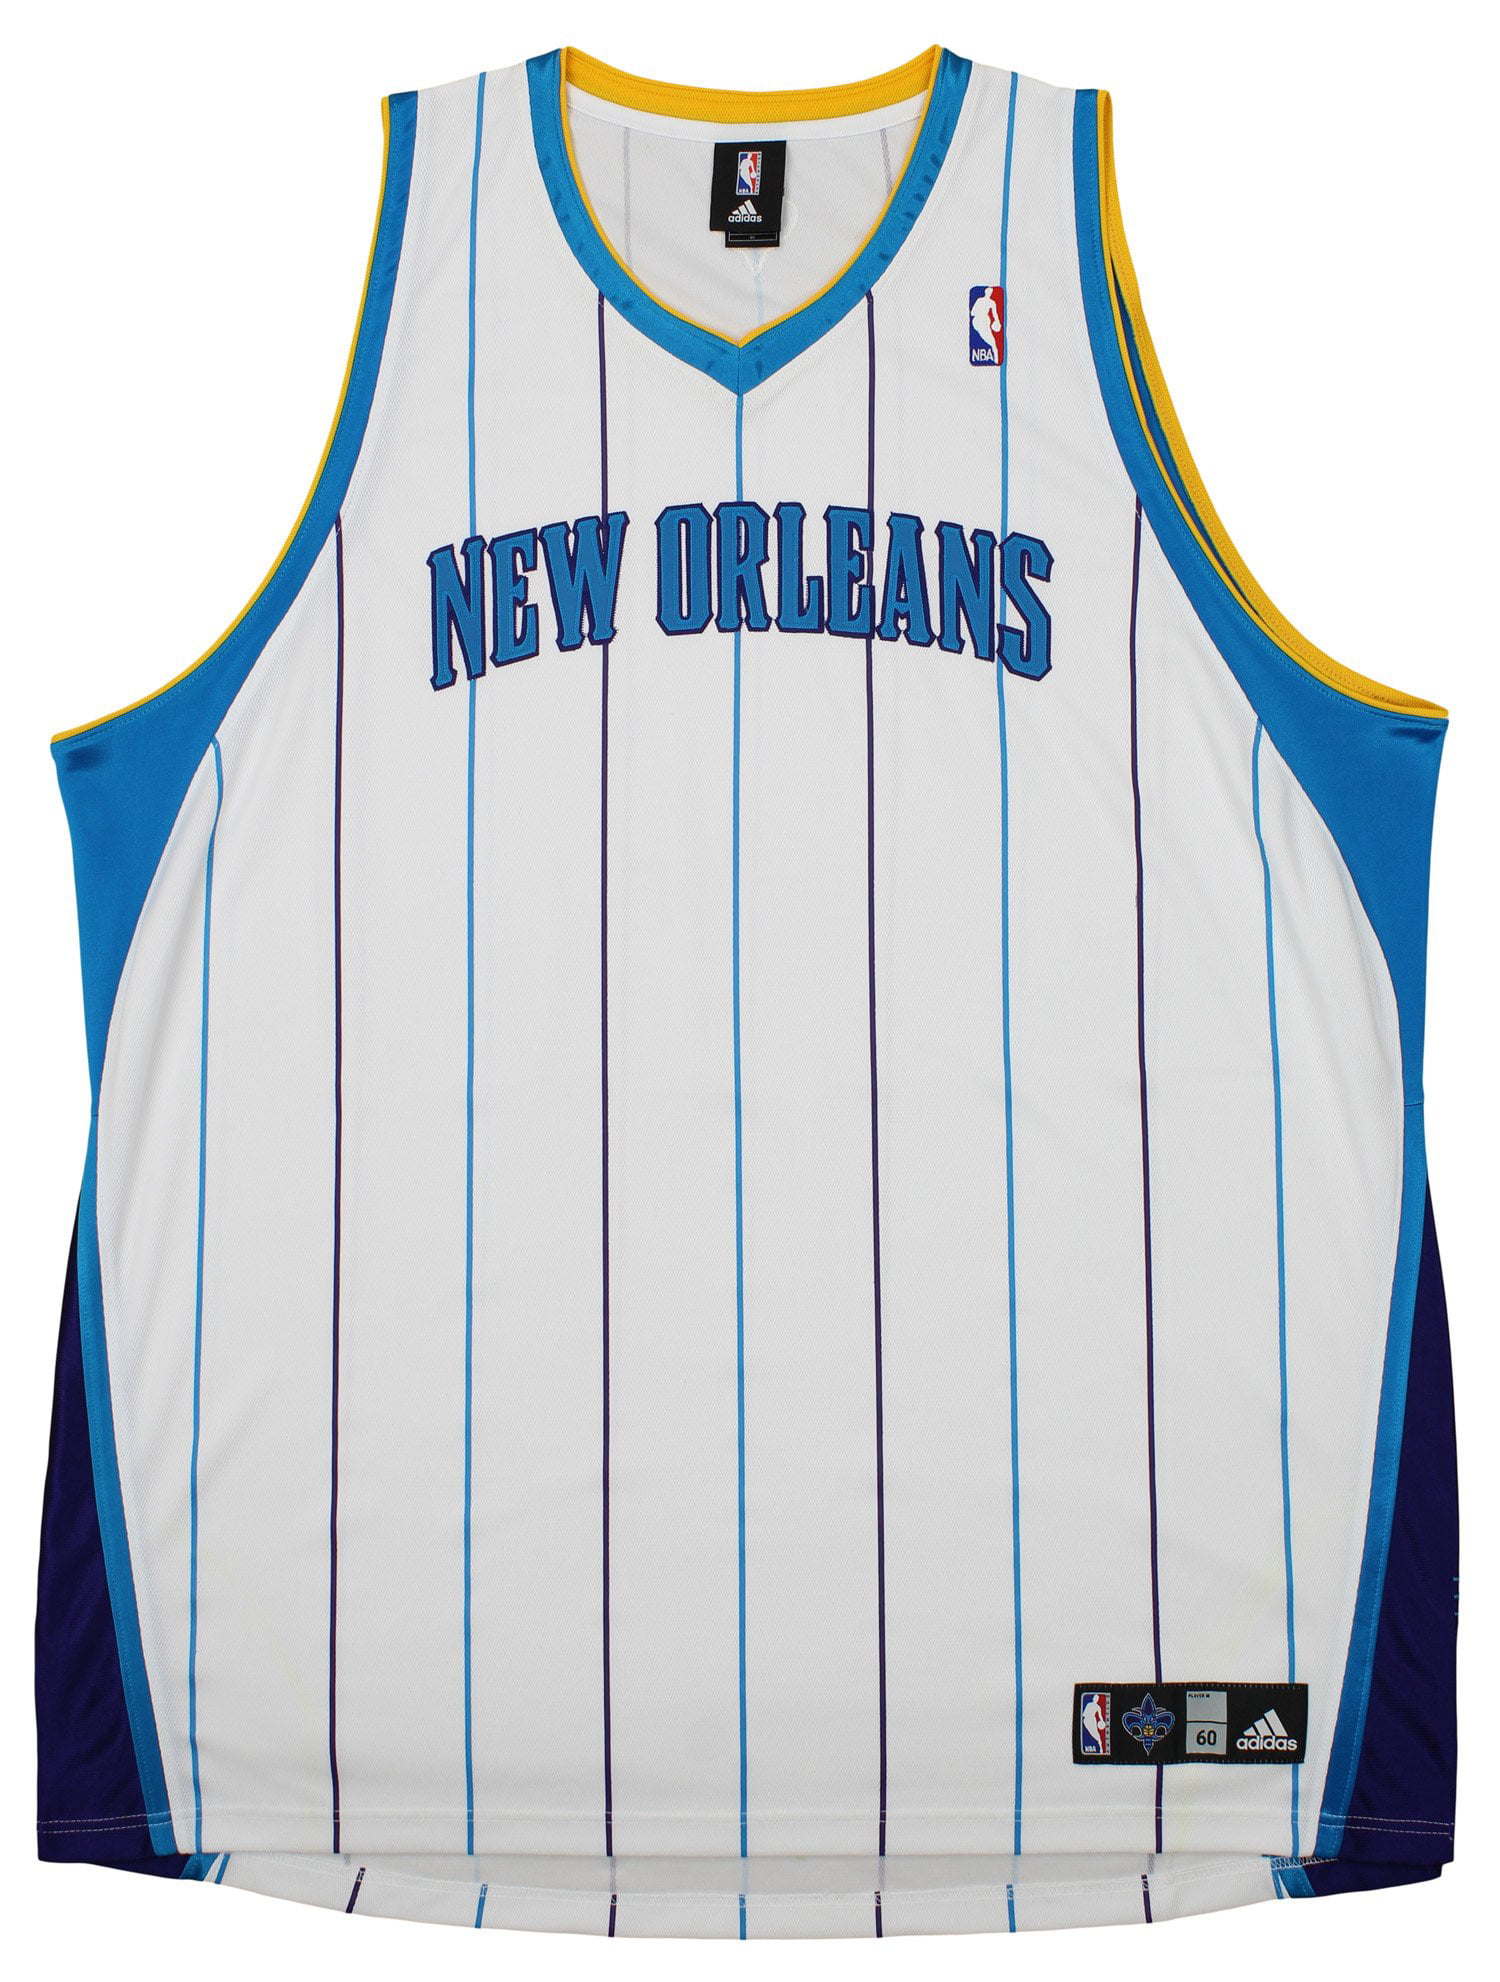 Adidas NBA Basketball Men's New Orleans Hornets Blank Jersey, White Striped - Walmart.com